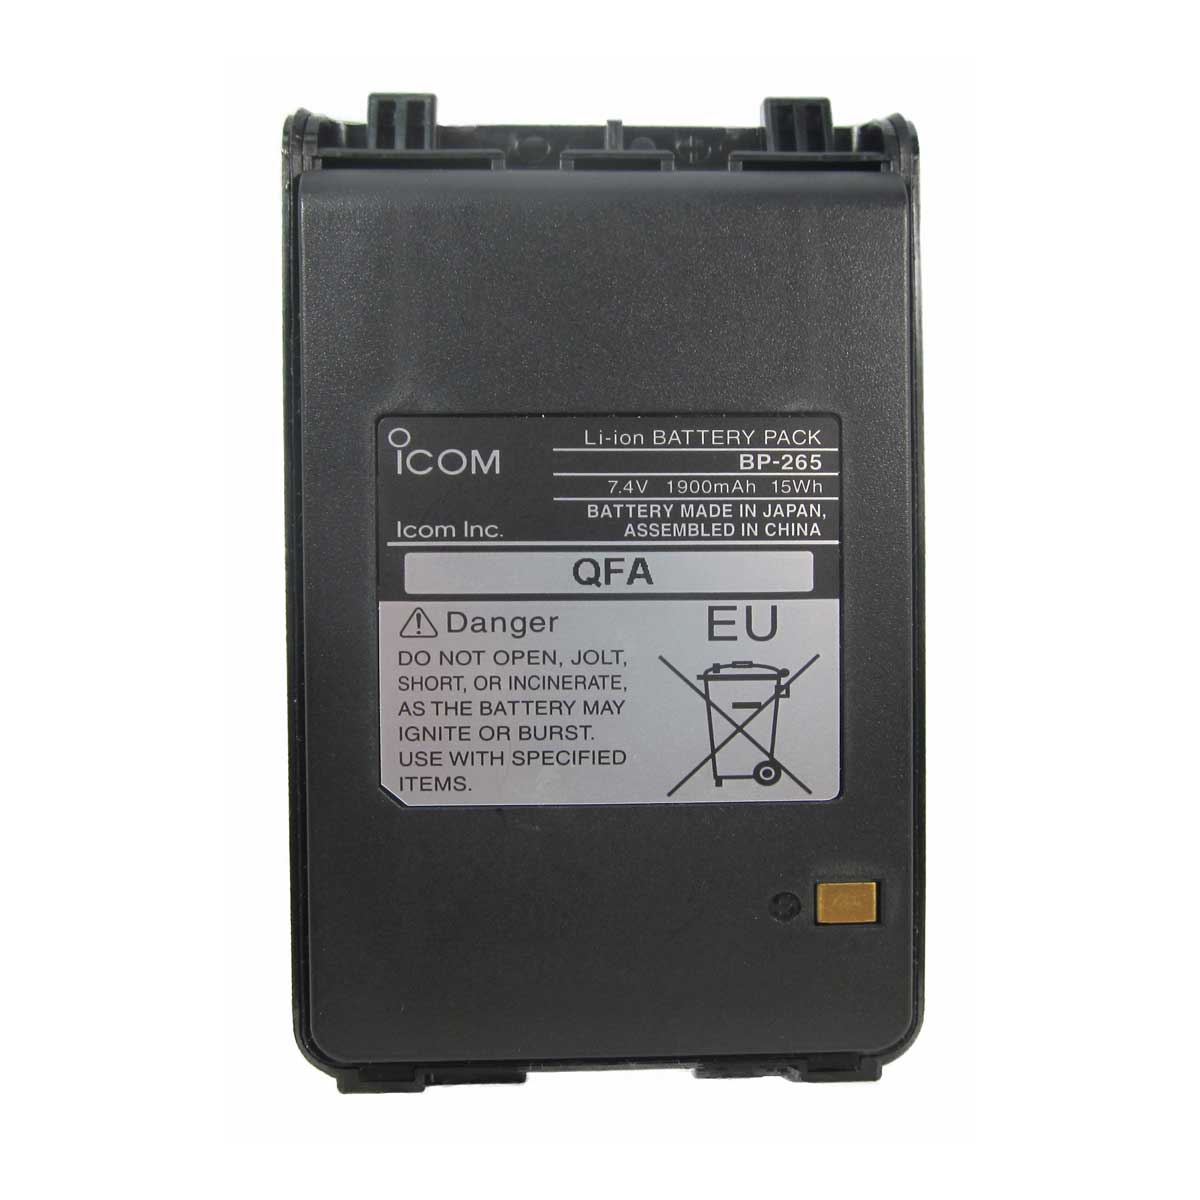 Batería Icom Li-Ion 1900 mAh para radio IC-F3003 y IC-F4003 BP-265